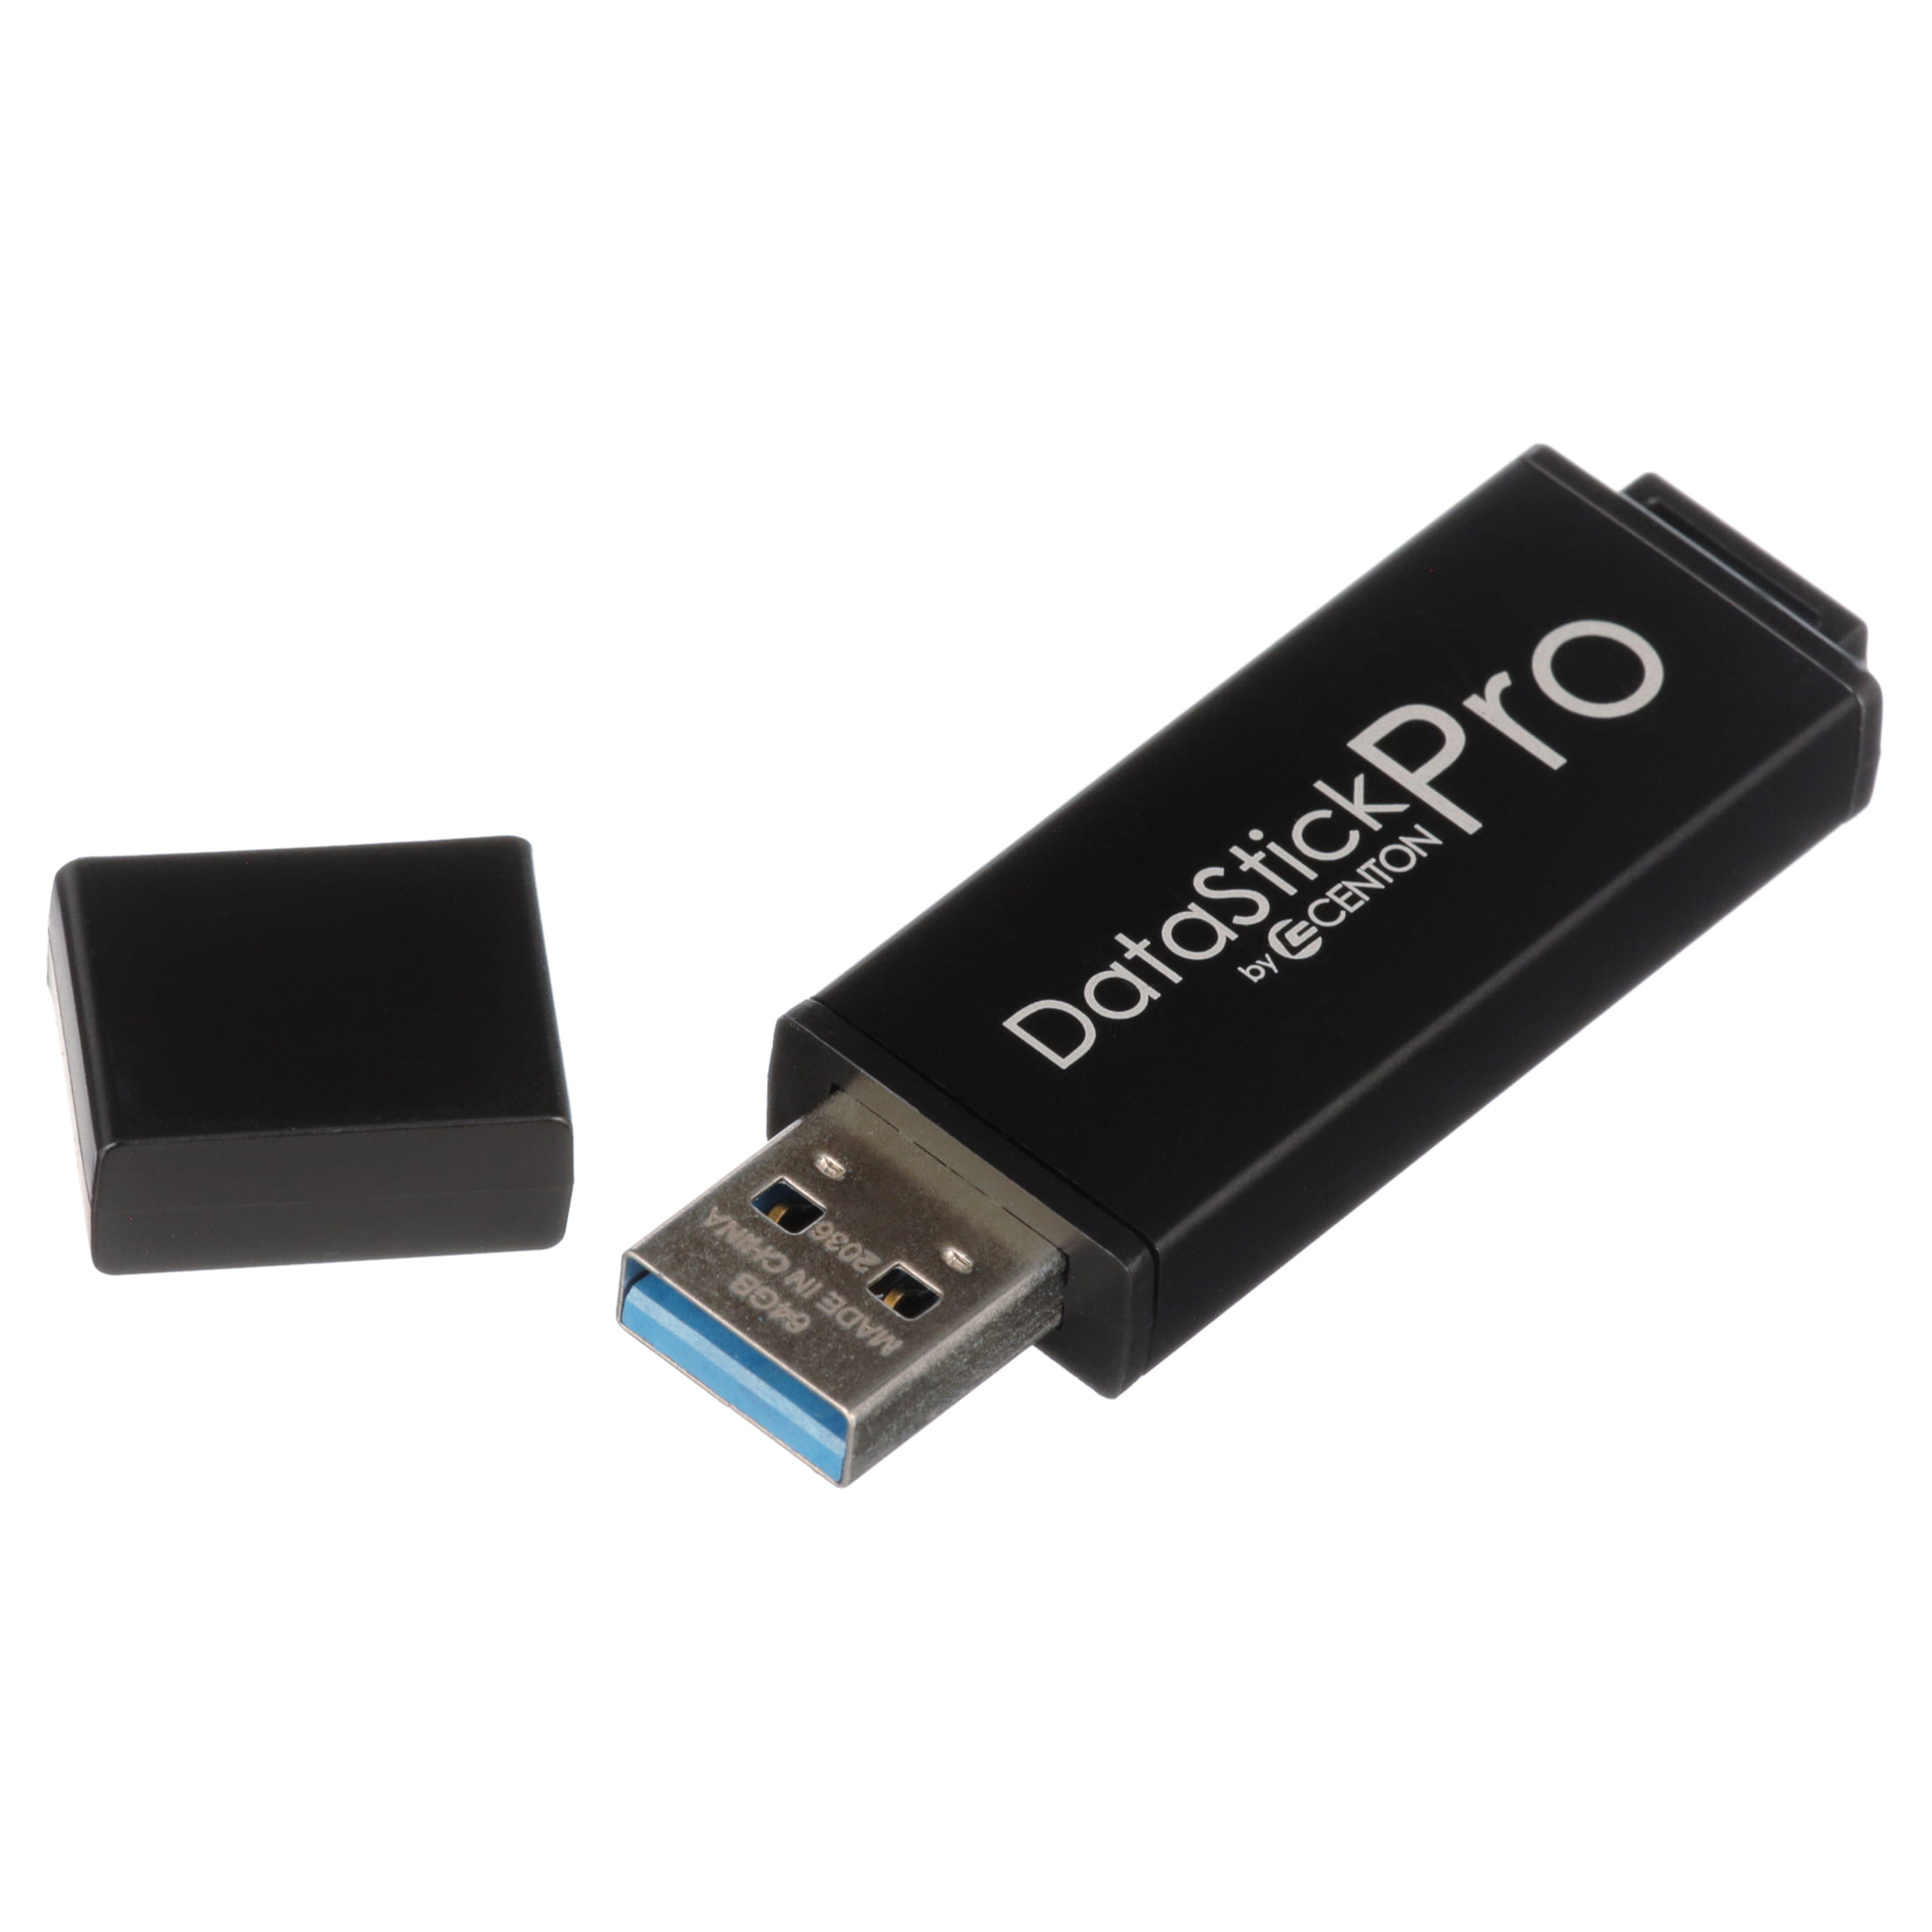 Centon Datastick Pro USB 3.0 (Black), 64GB